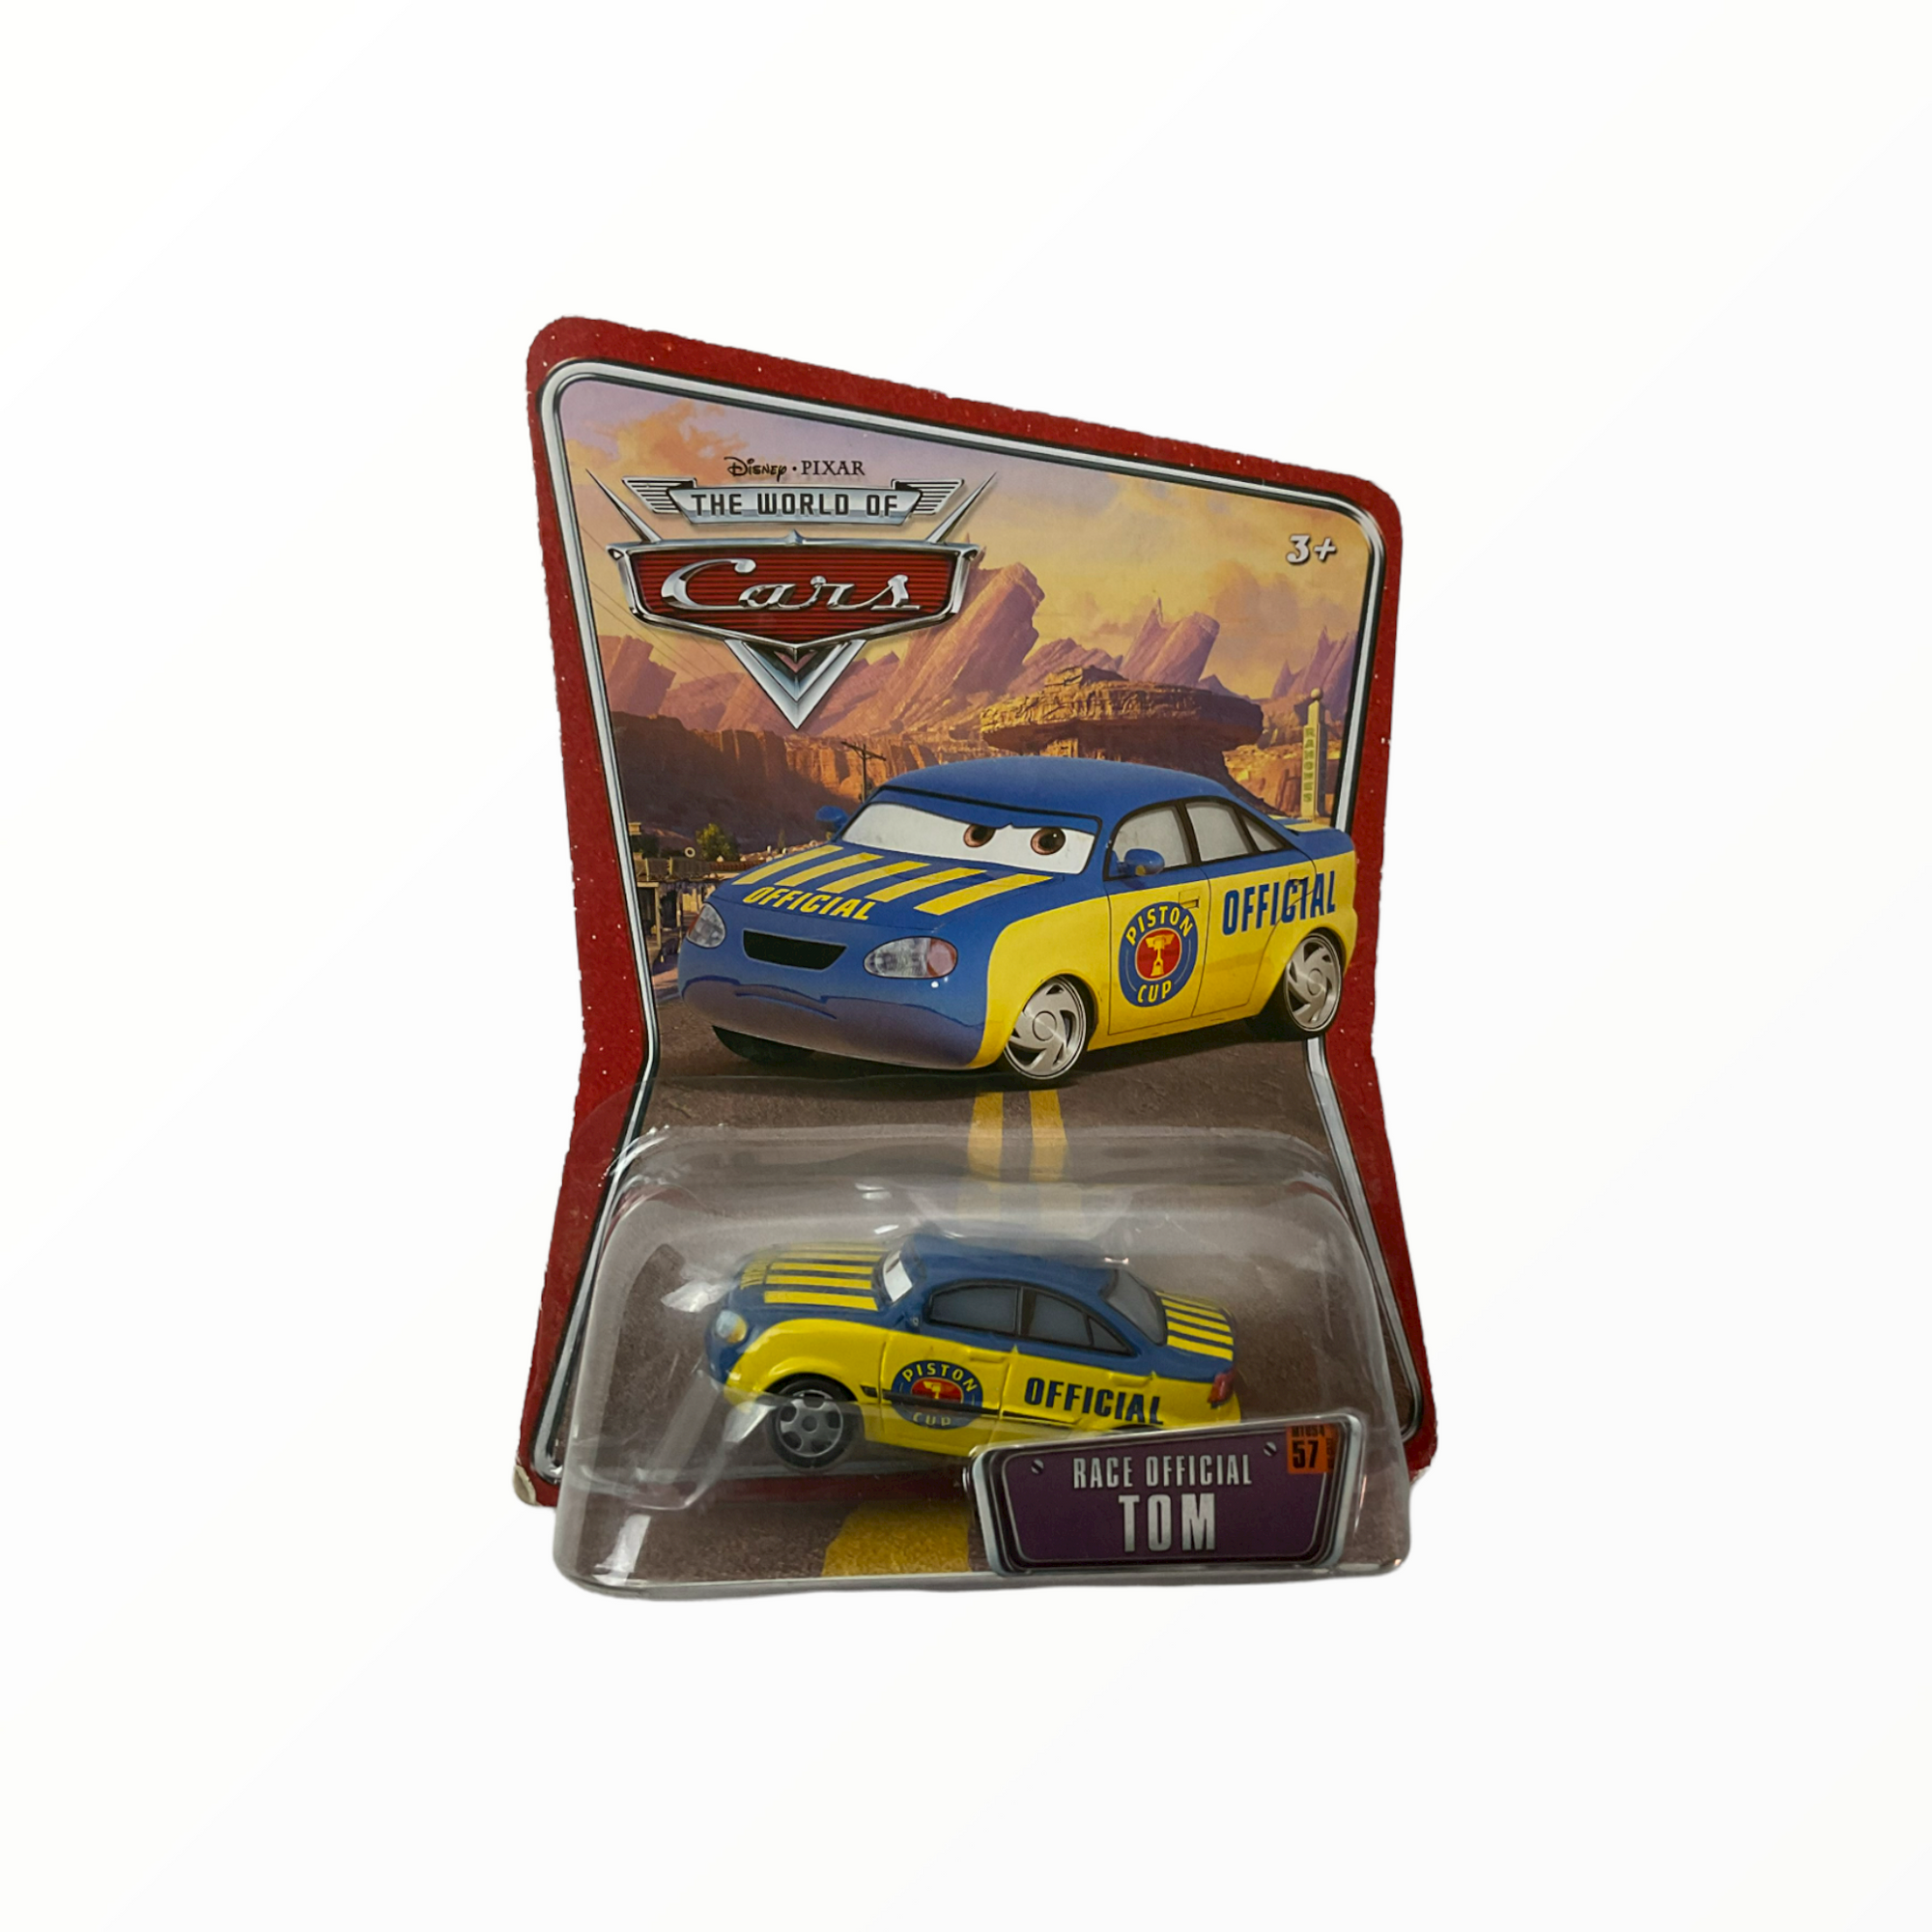 Disney Pixar CARS Race Official Tom 1:55 Scale Die-Cast Vehicle